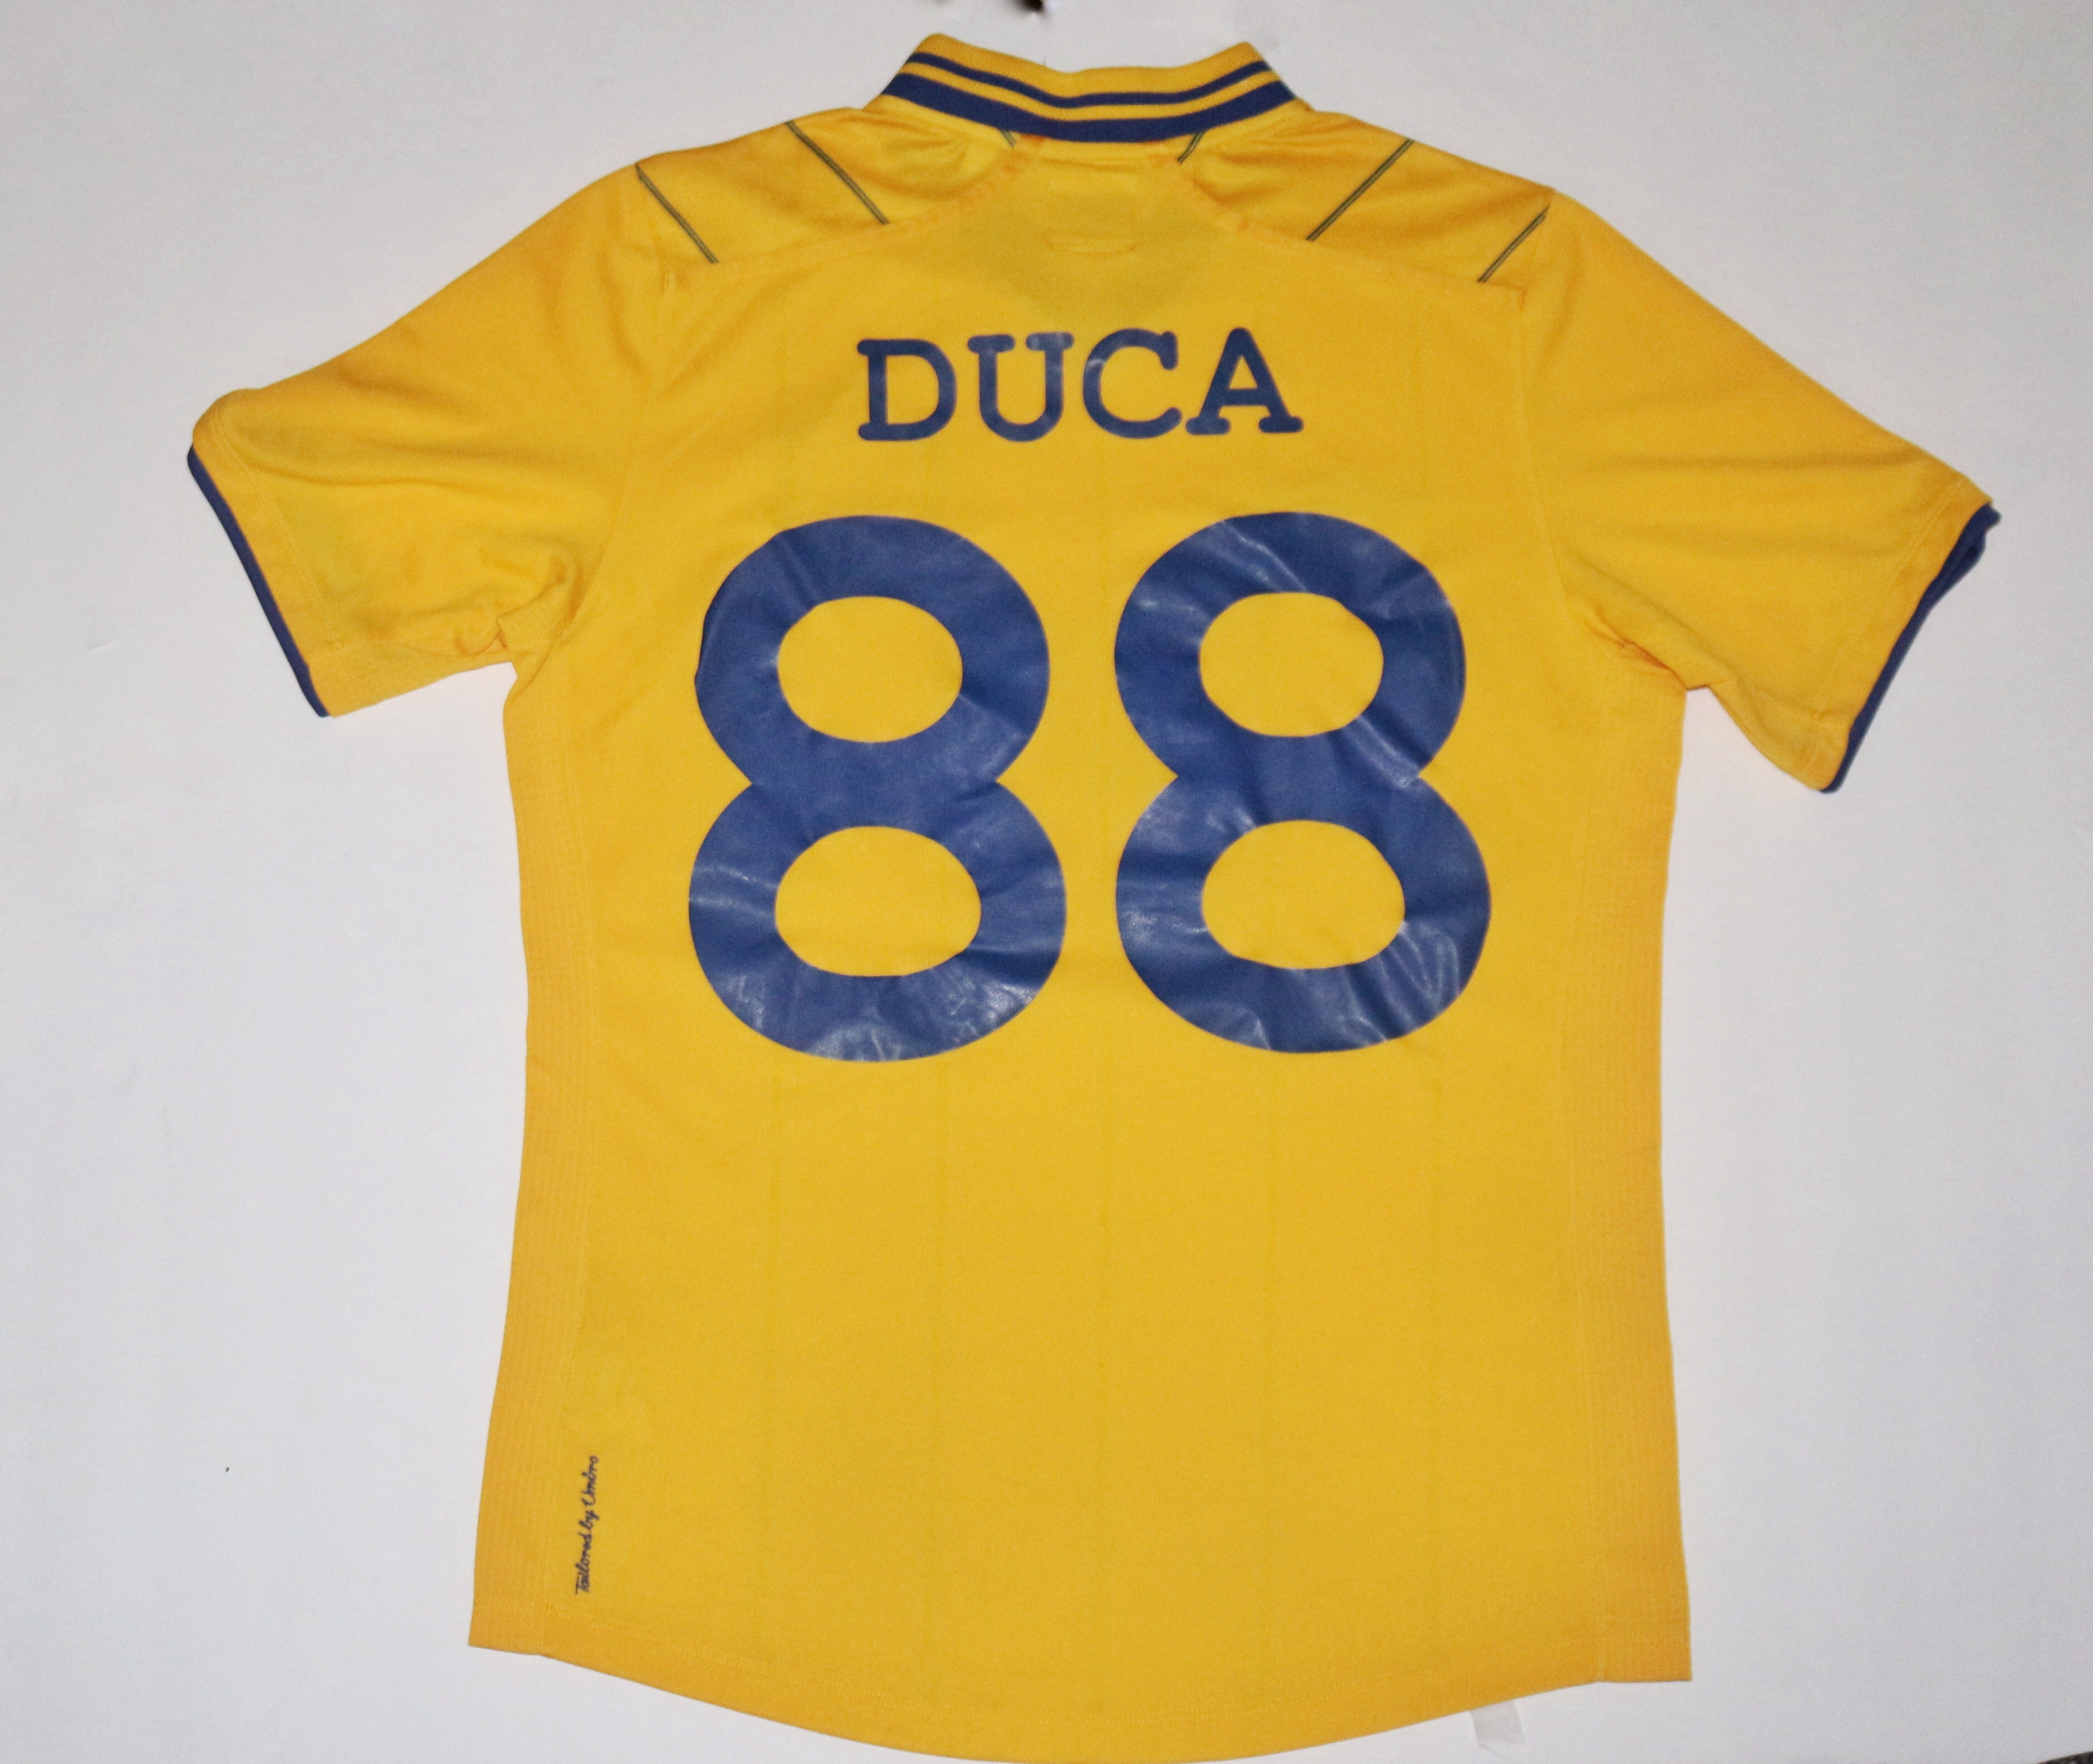 2012 Sweden National Team Home Jersey S (#88 Duca)